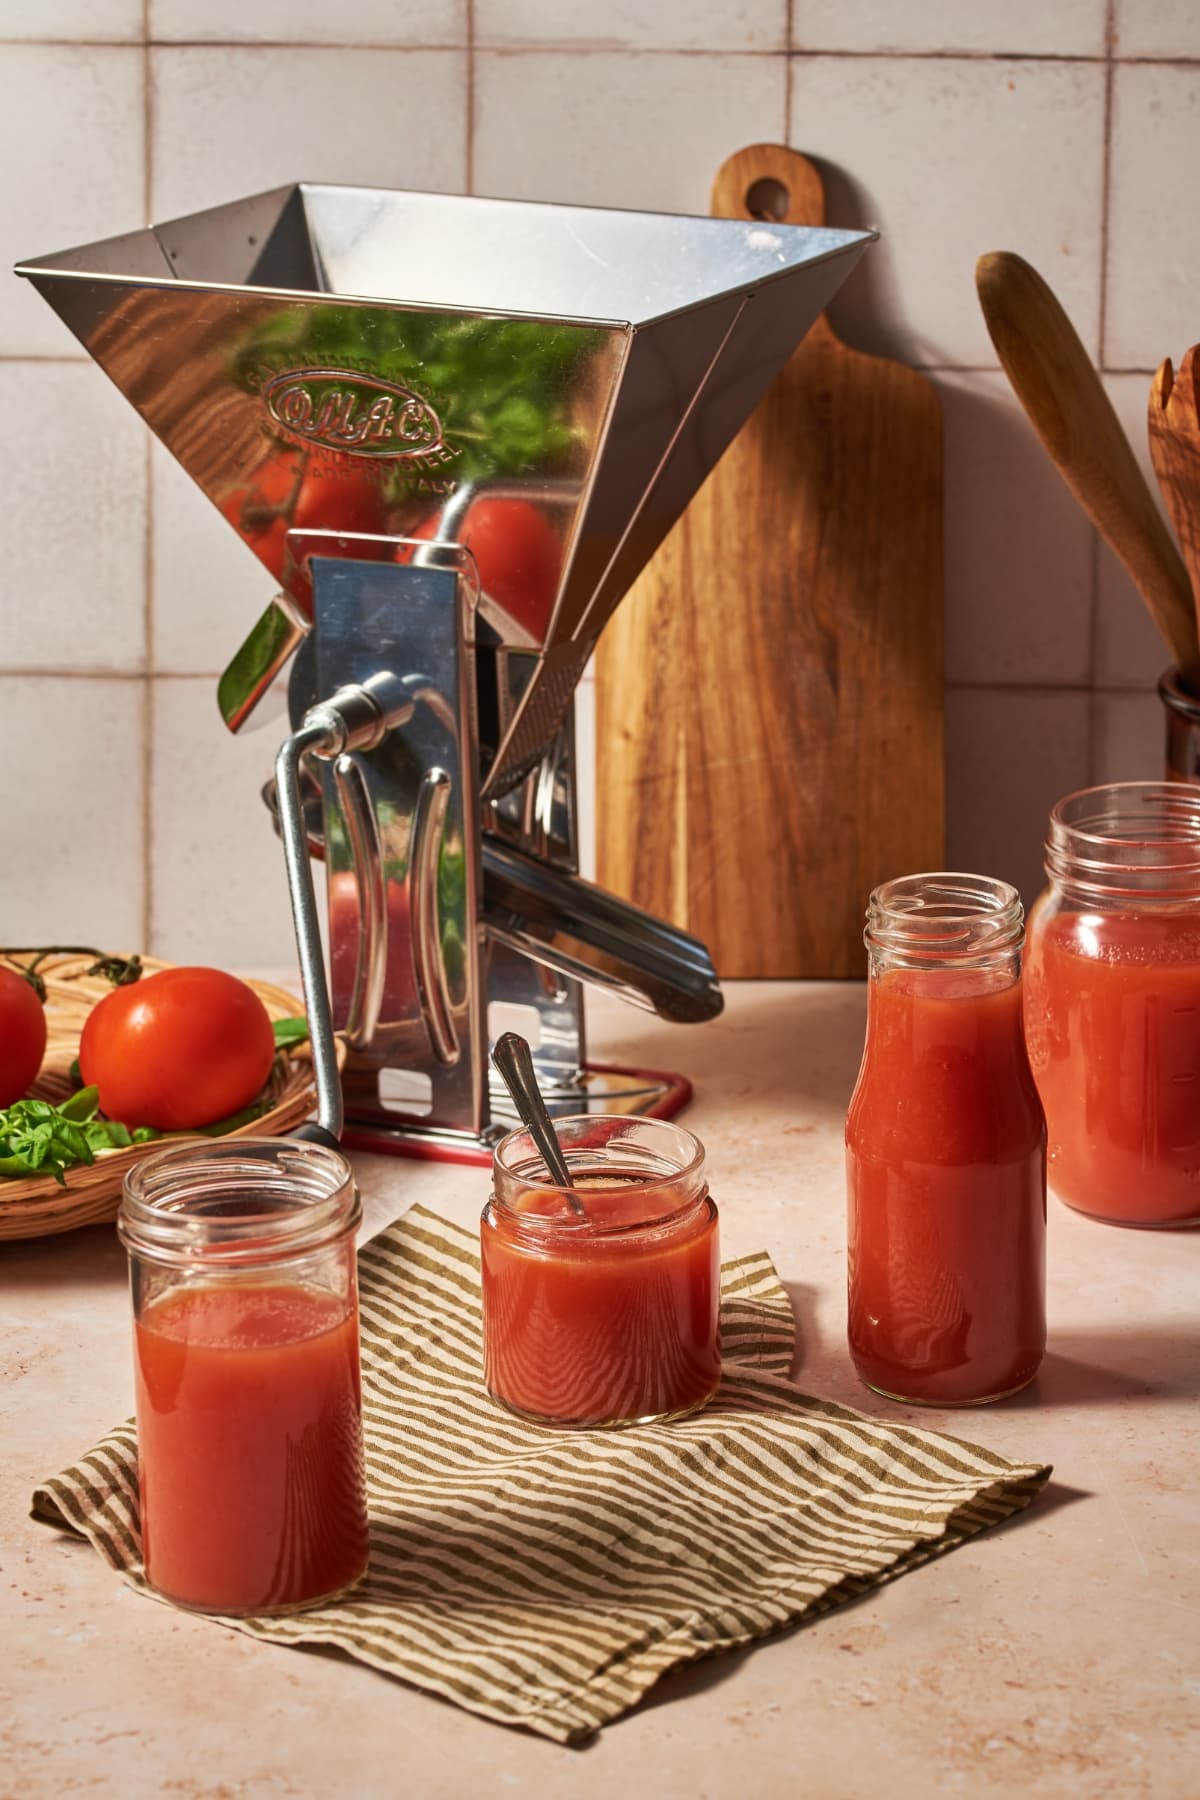 homemade tomato passata prepared in jars on a table